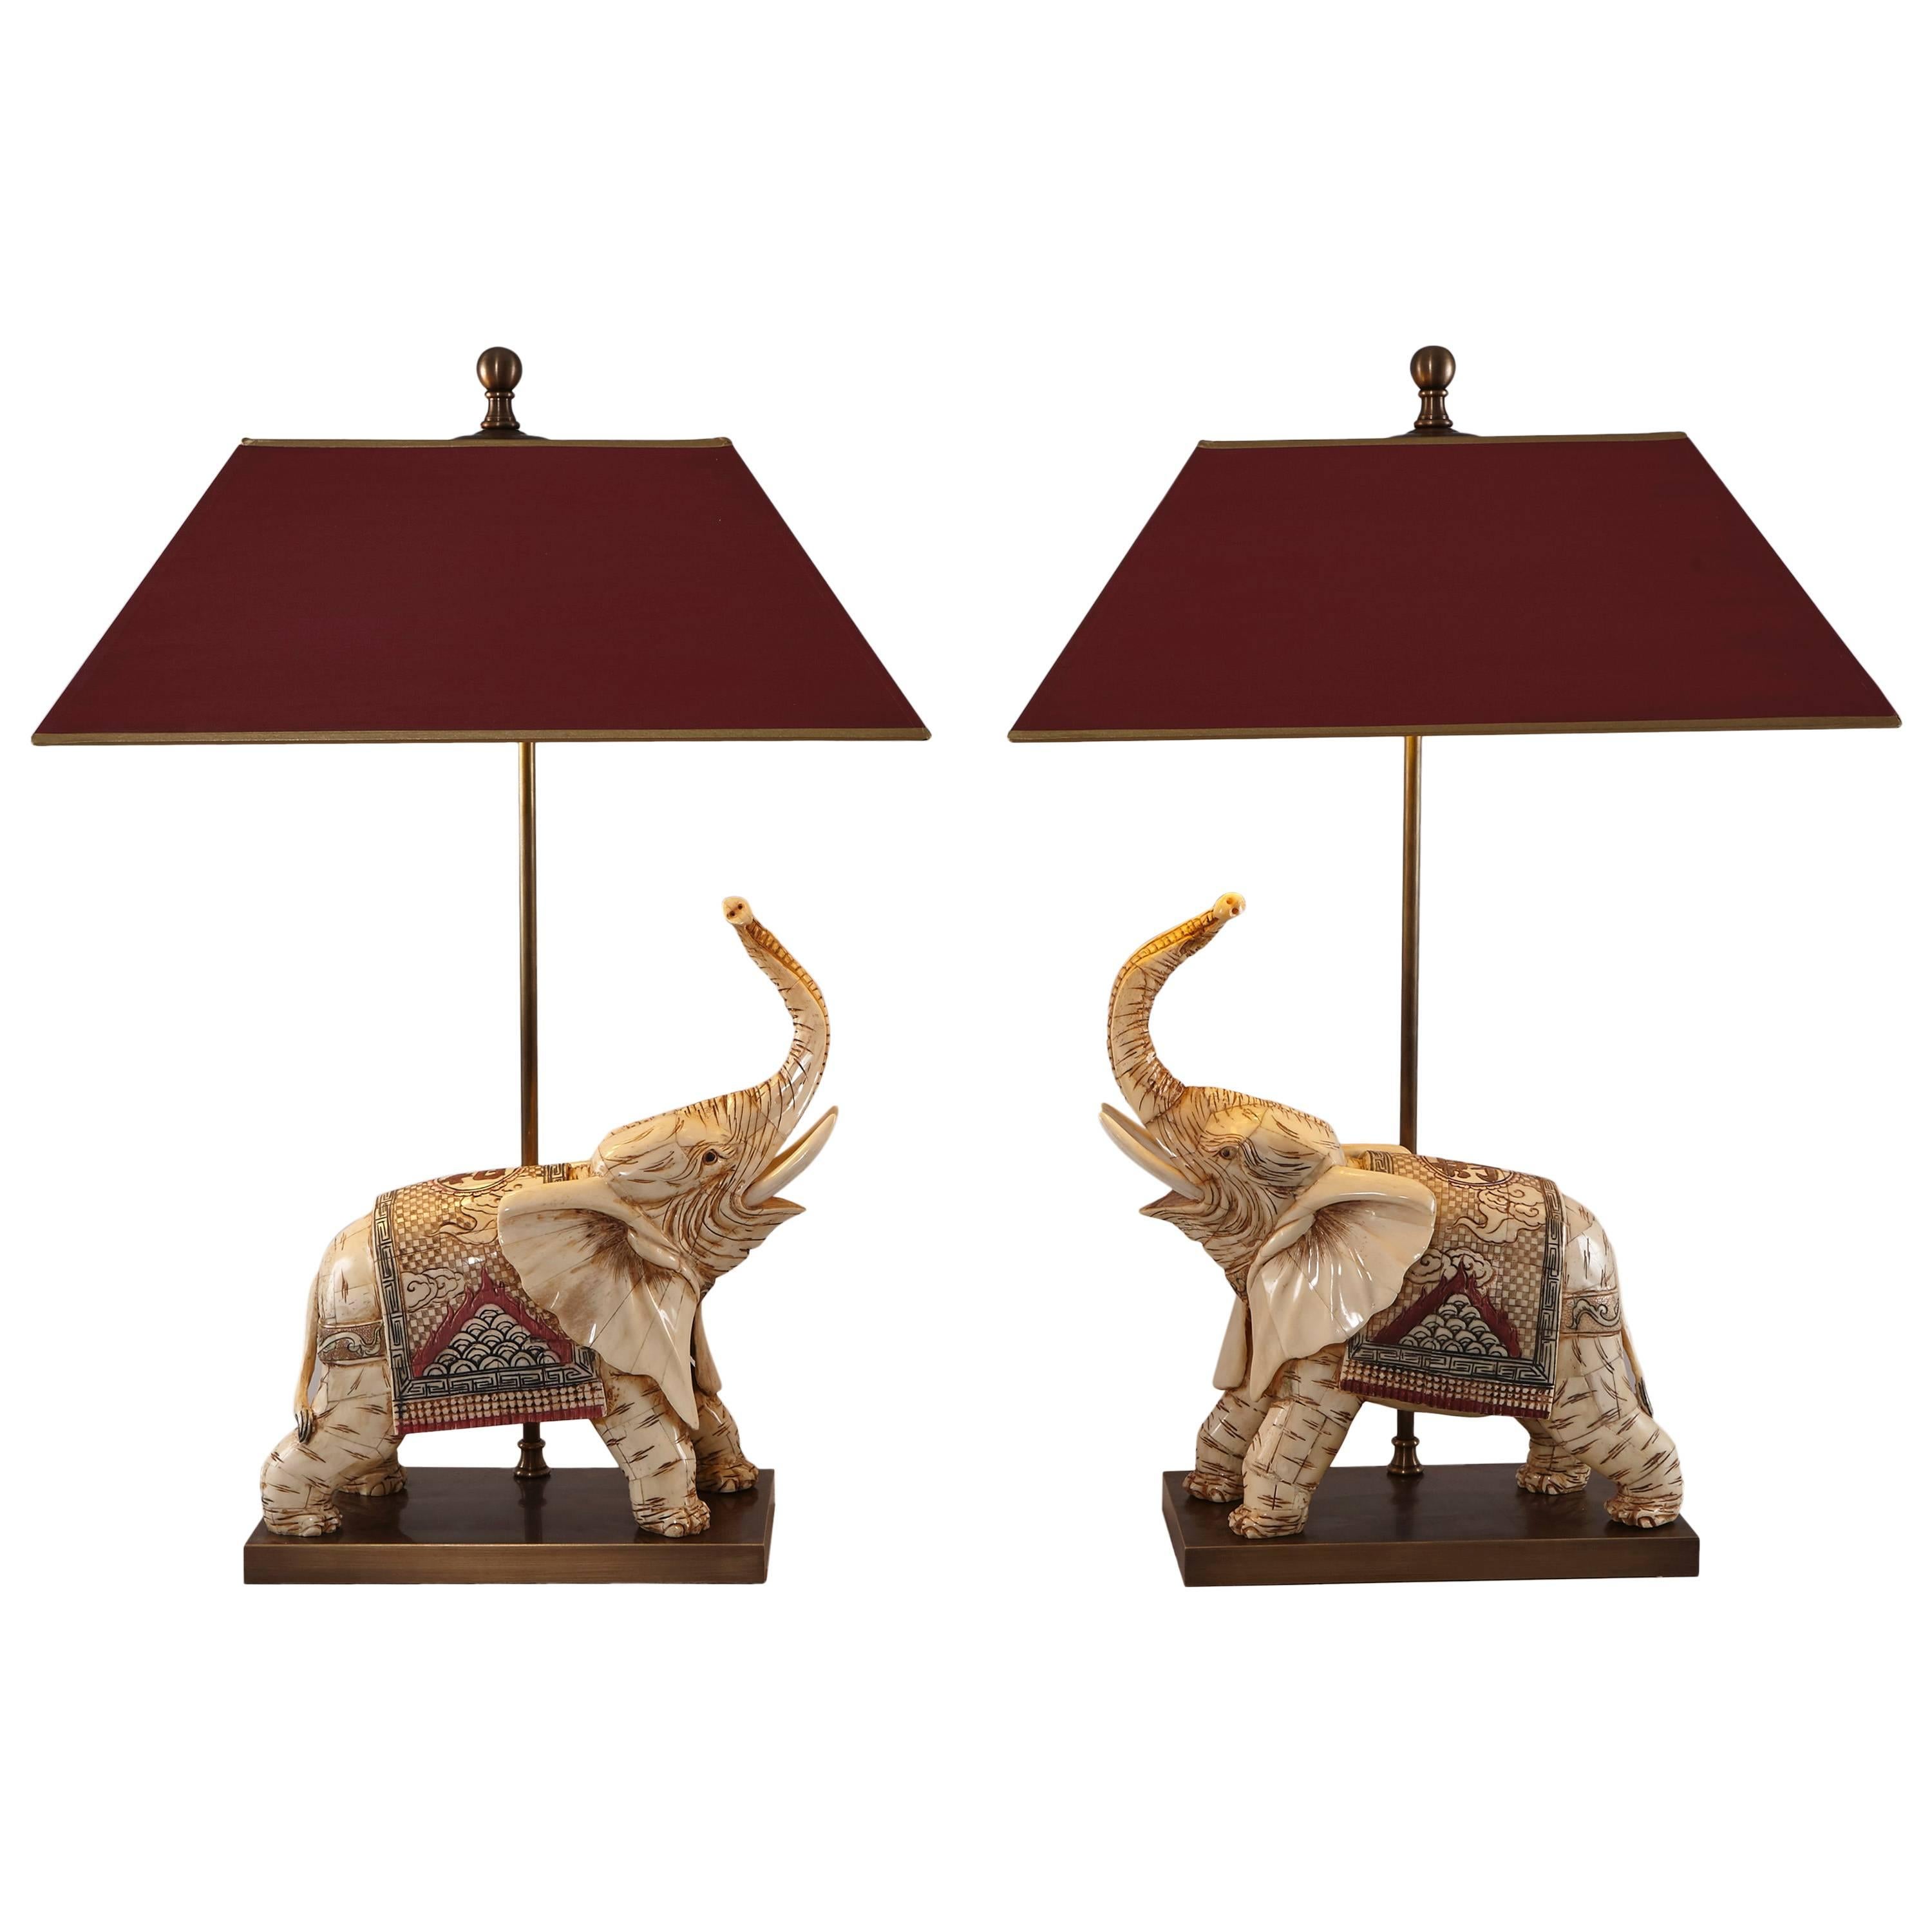 Pair of Bone Elephants as Table Lamps